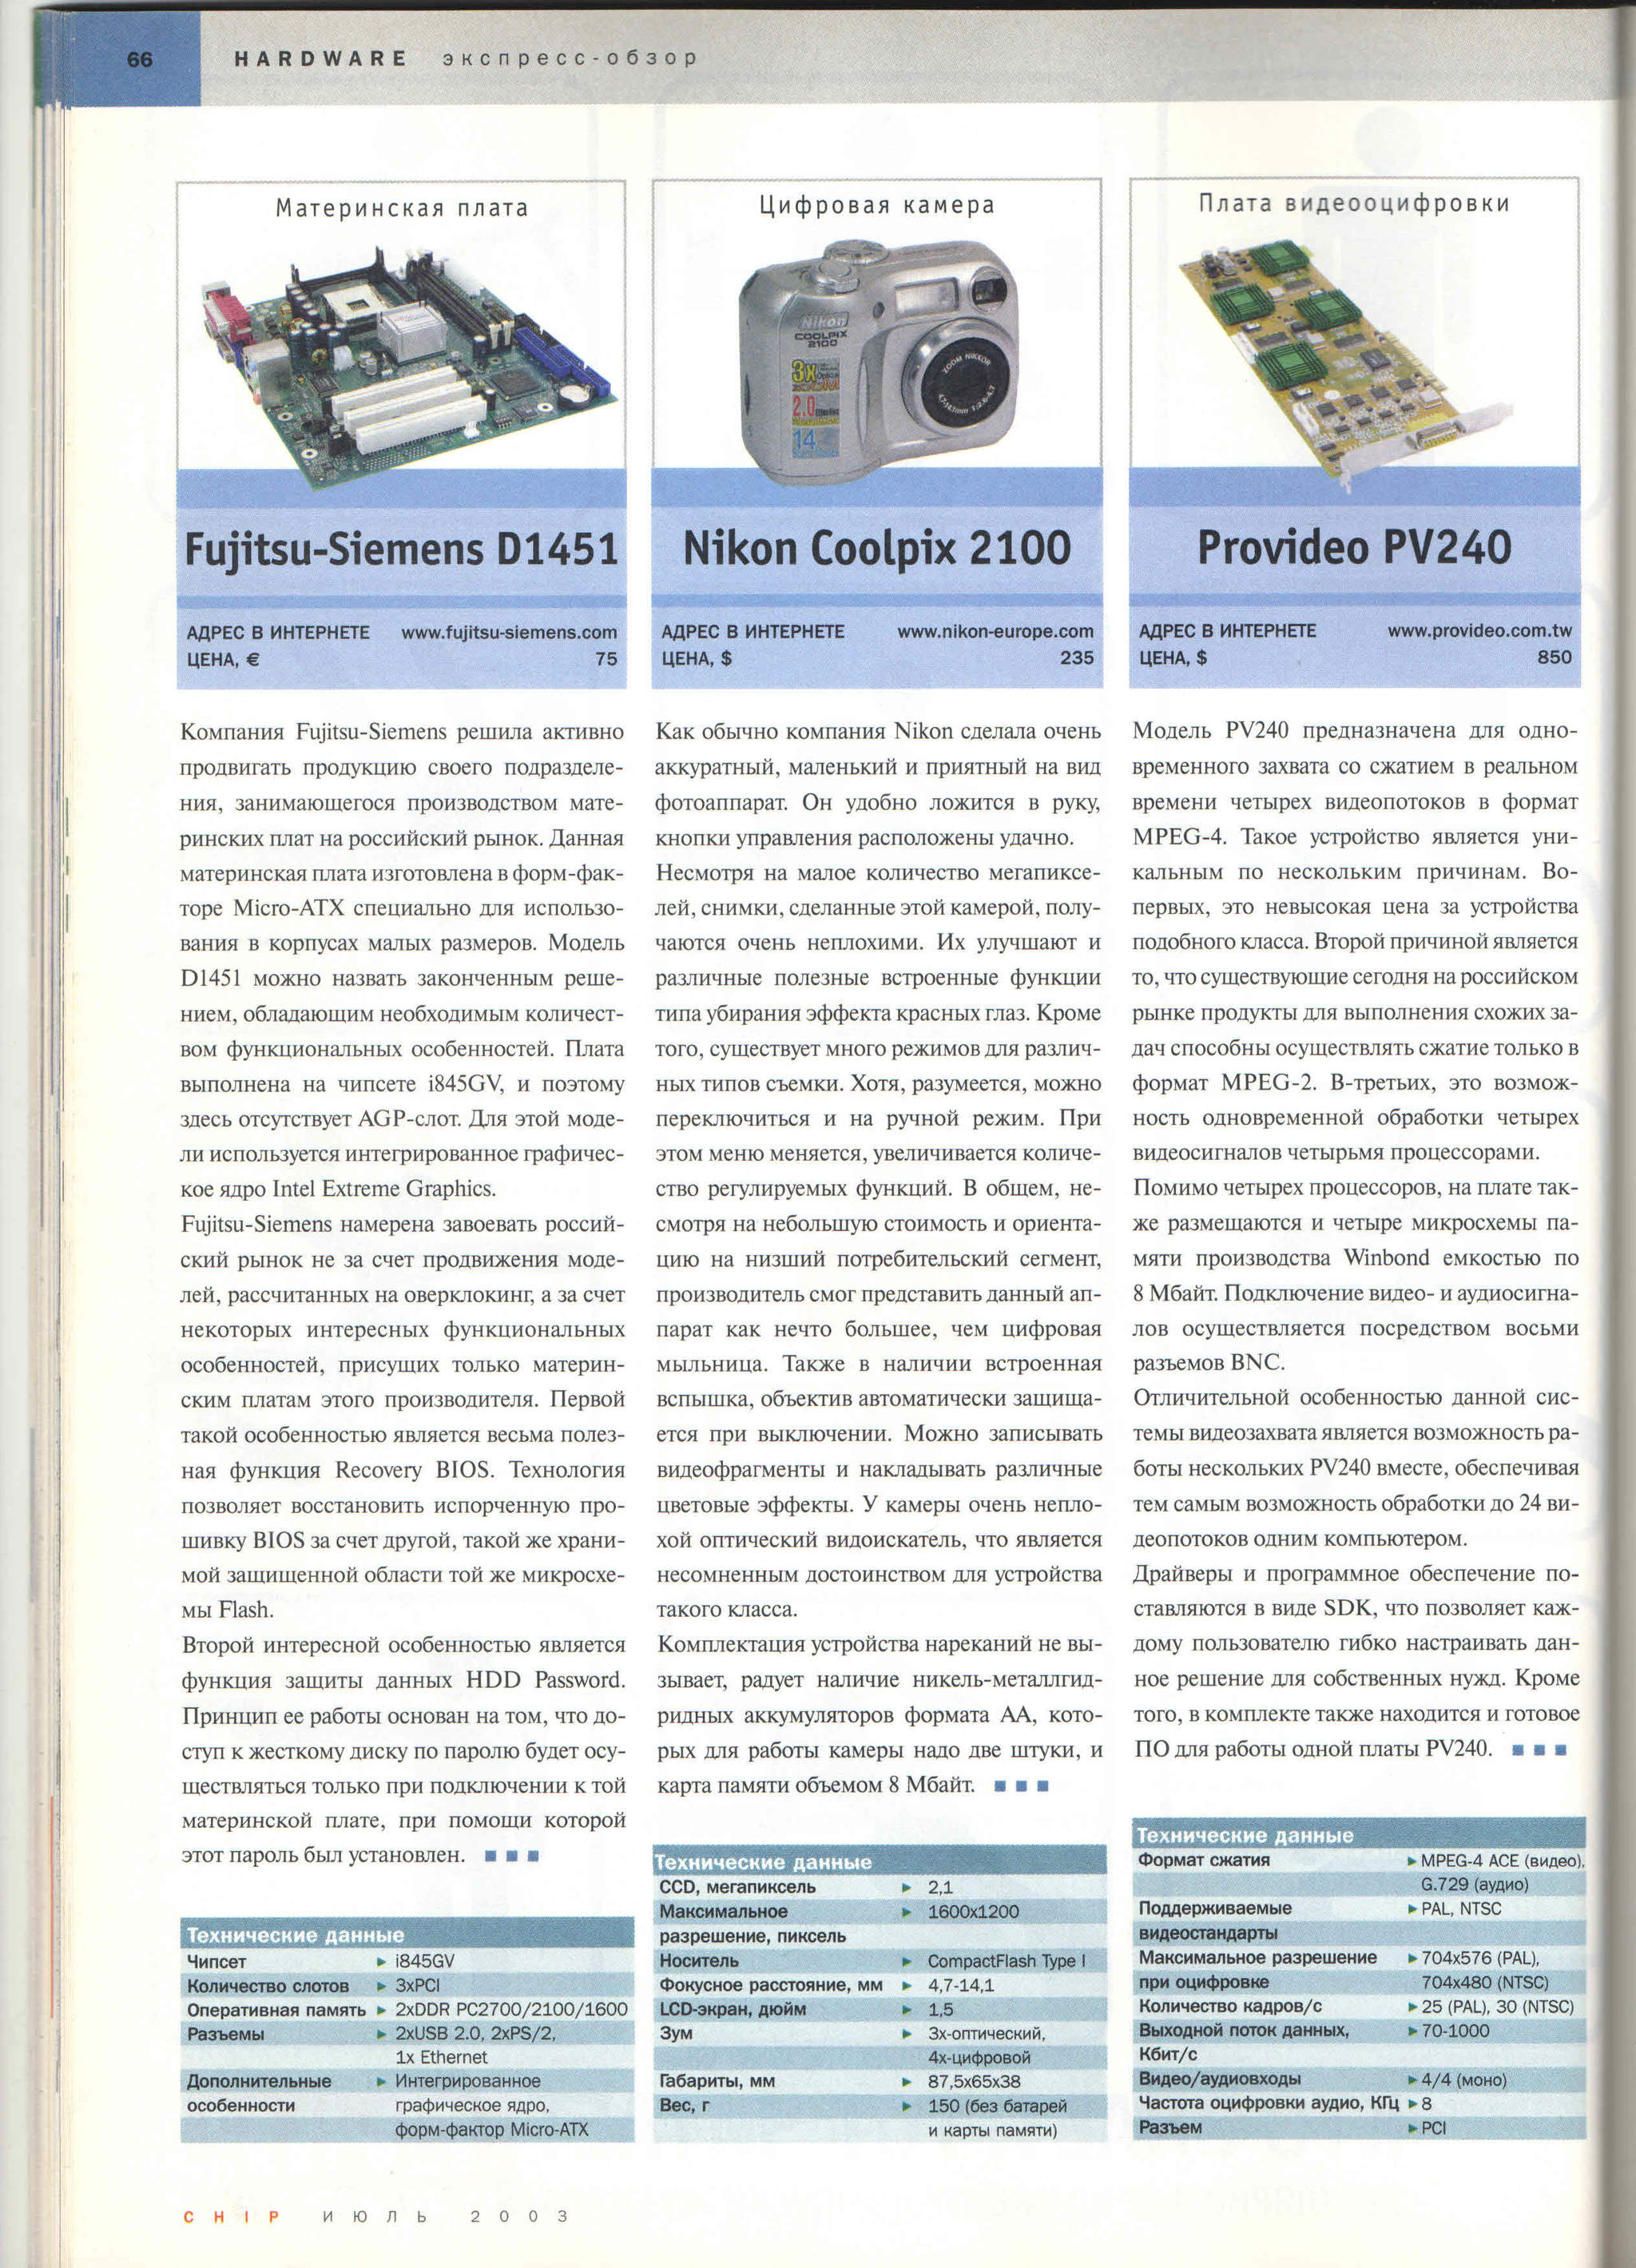 2003 issue of Chip magazine - My, Chip, Computer hardware, Computer, Prices, Memories, Technologies, Longpost, Retro computer